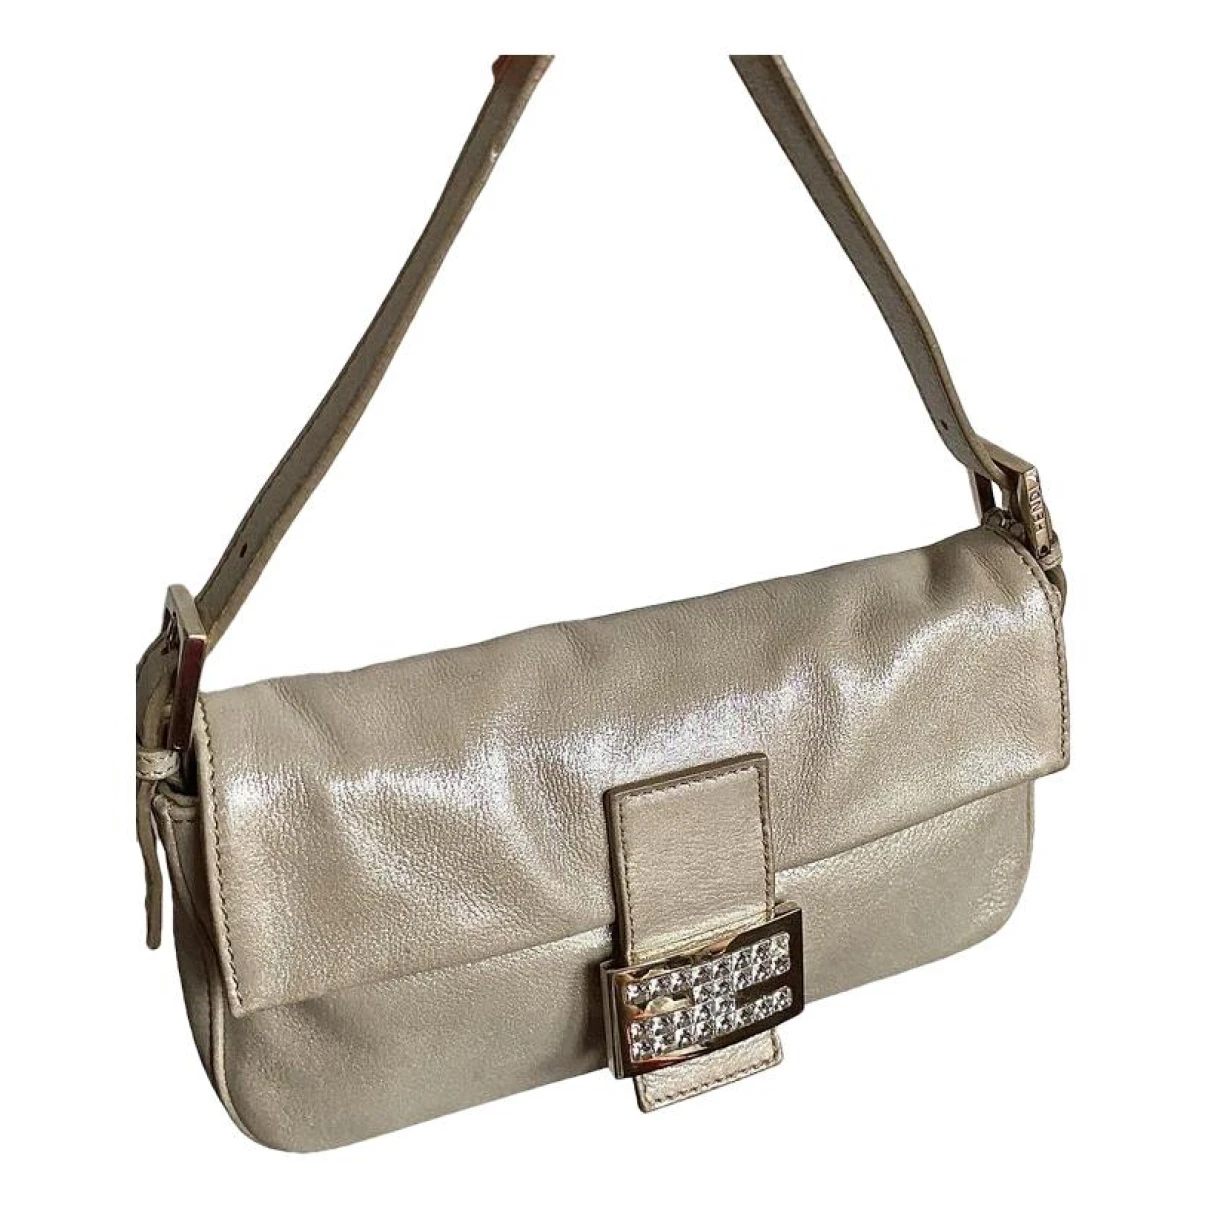 Pre-owned Fendi Baguette Leather Handbag In Gold